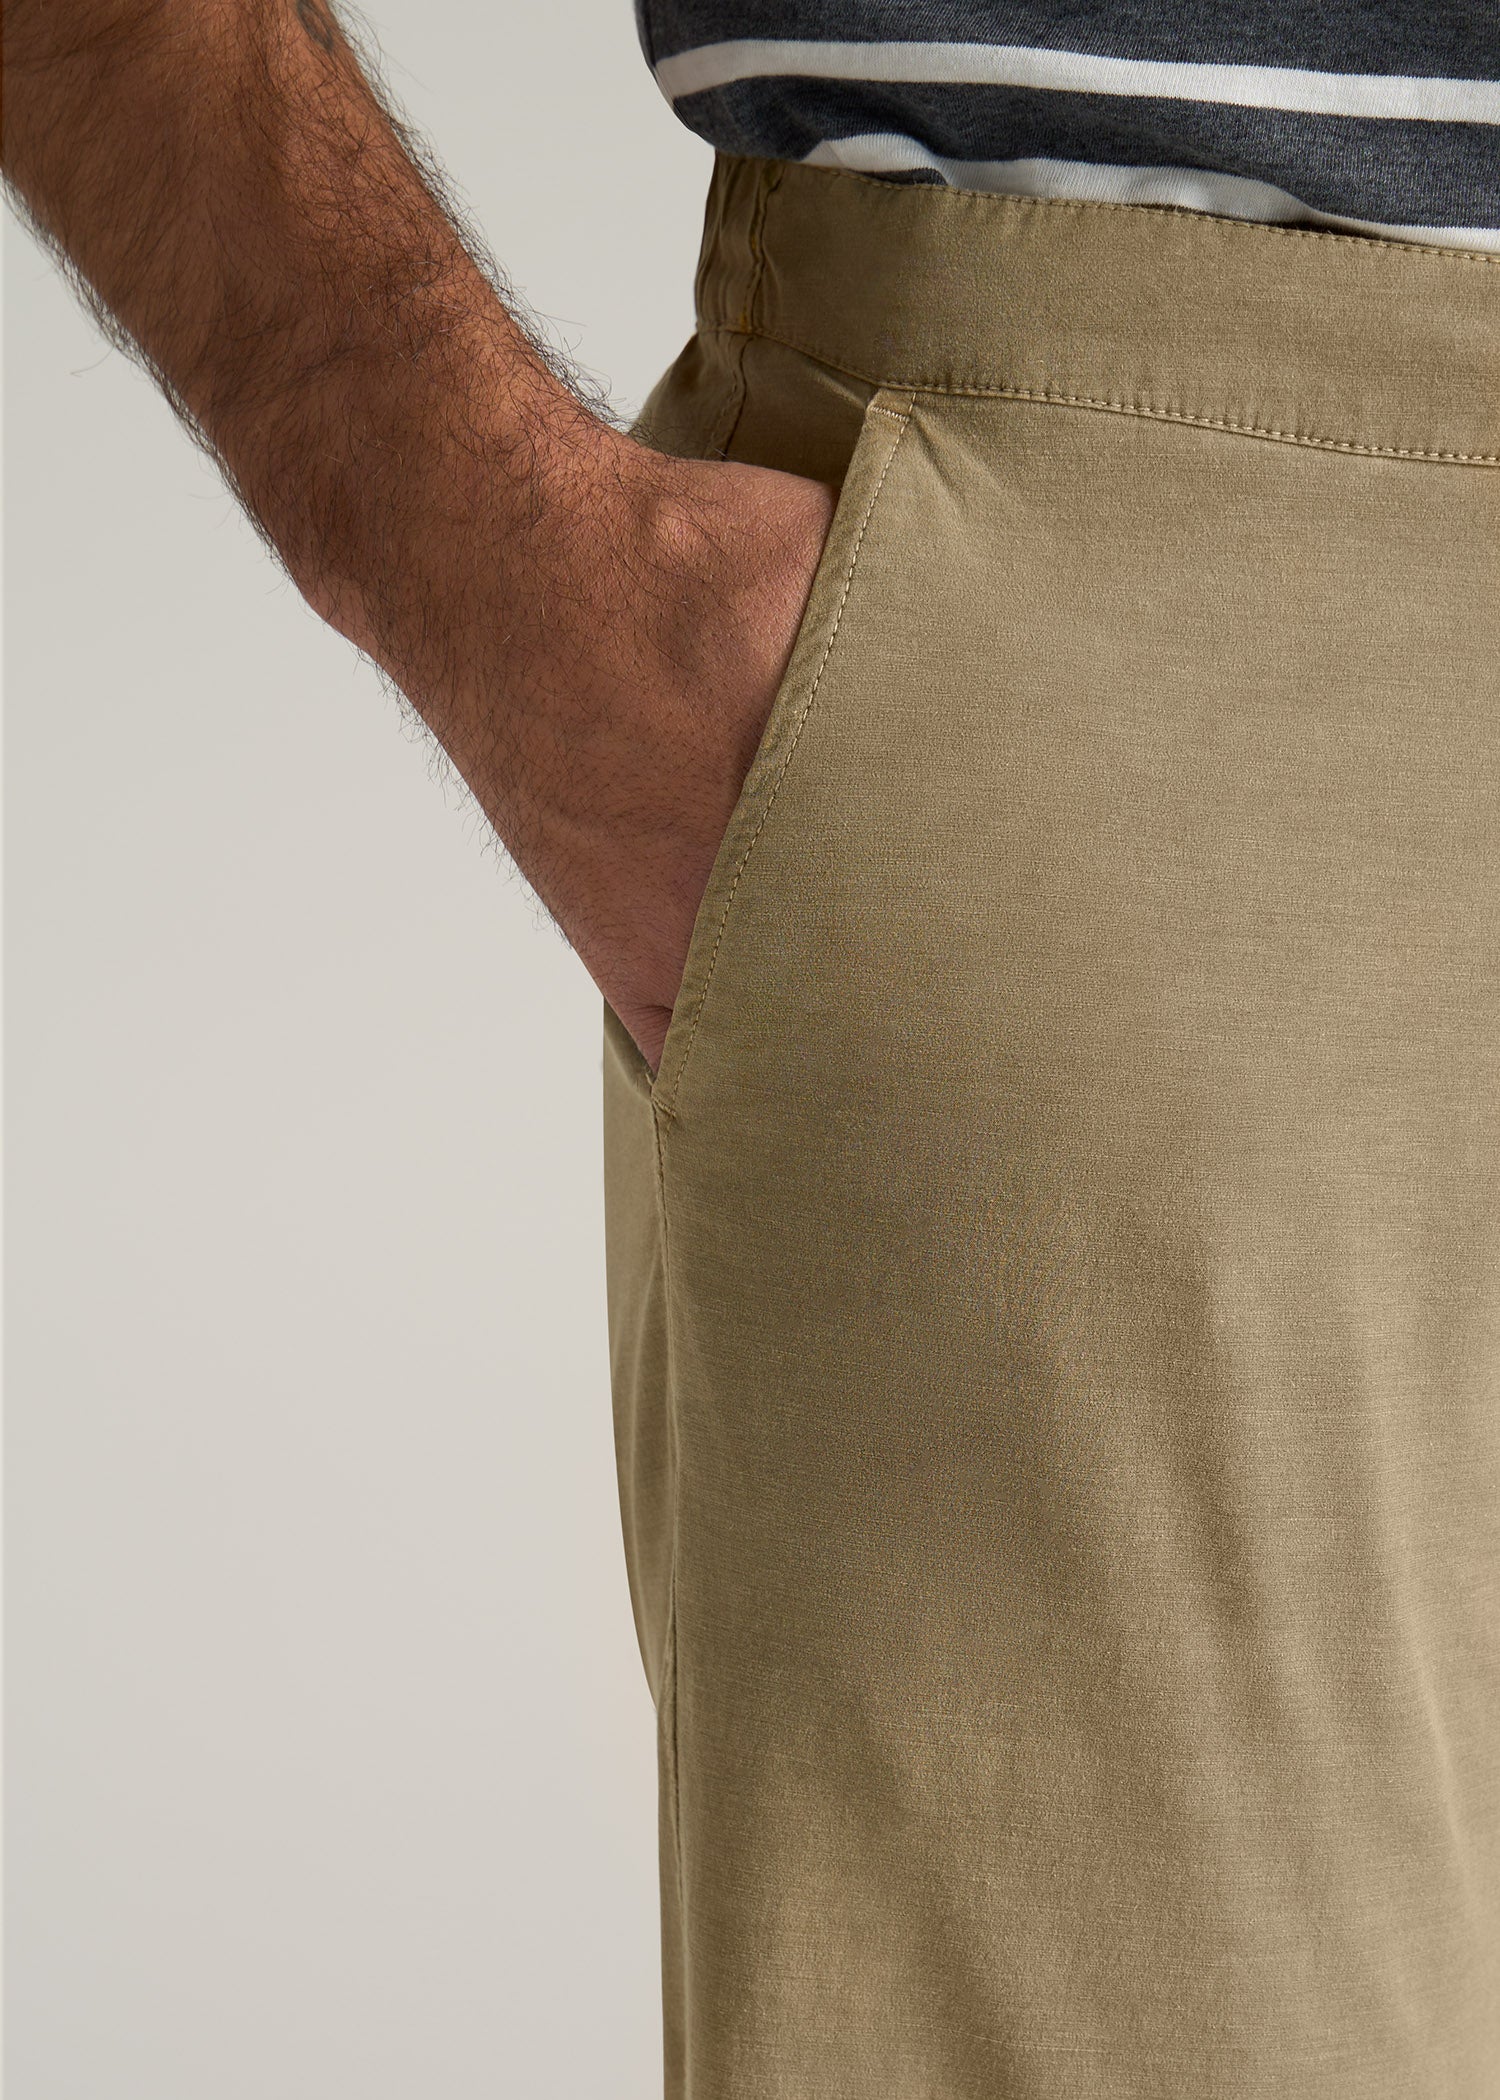 American-Tall-Men-LJ-Deck-Shorts-Vintage-Buck-detail